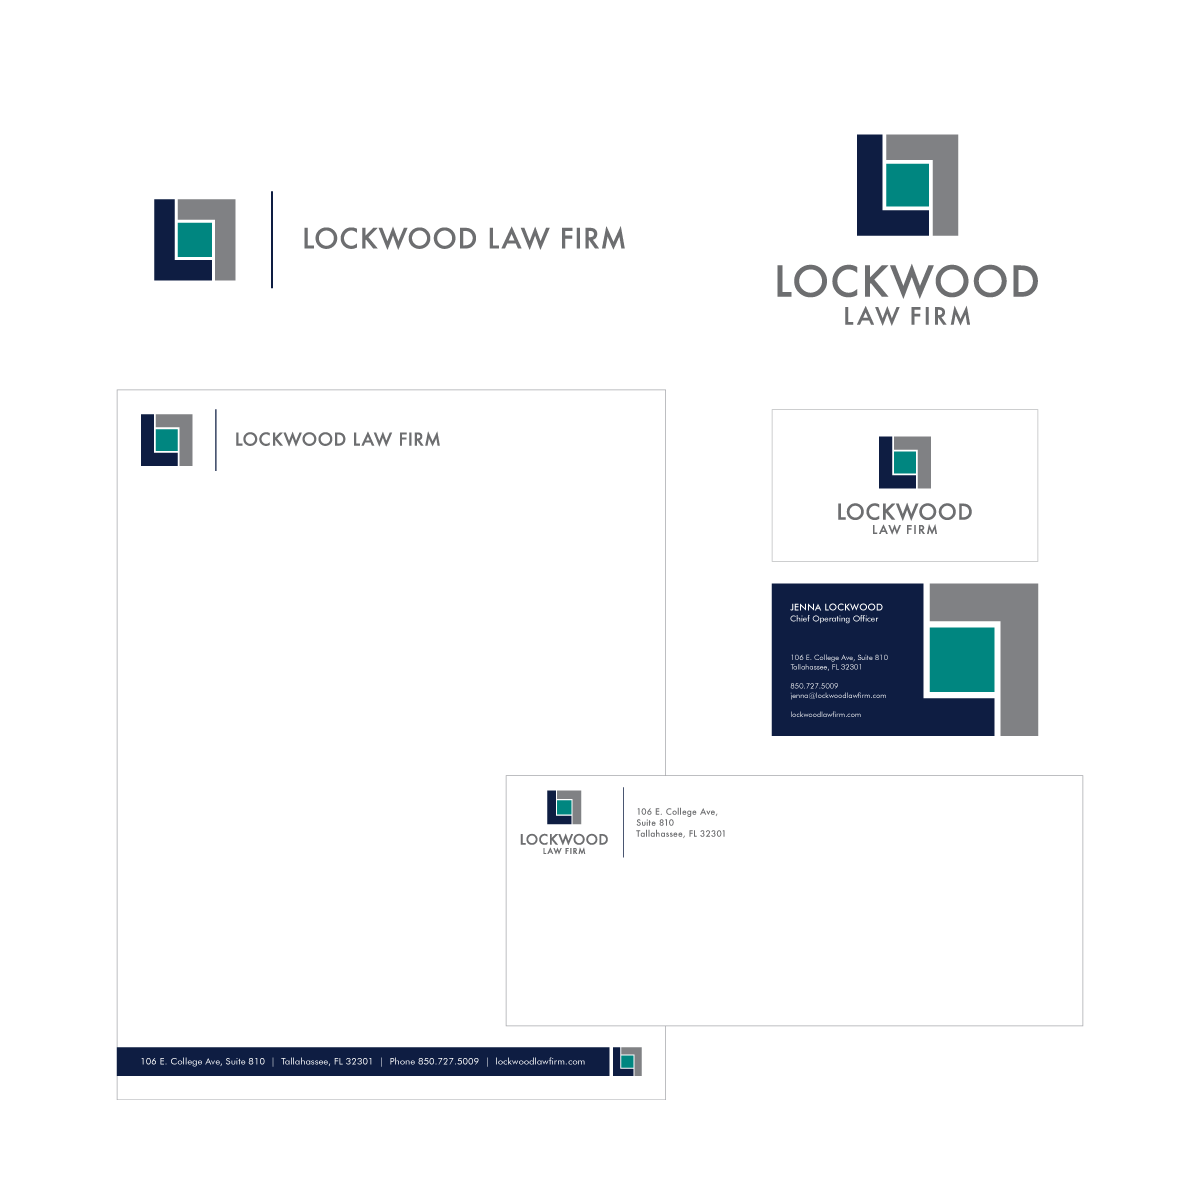 Lockwood Law Firm
Logo & Letterhead Design